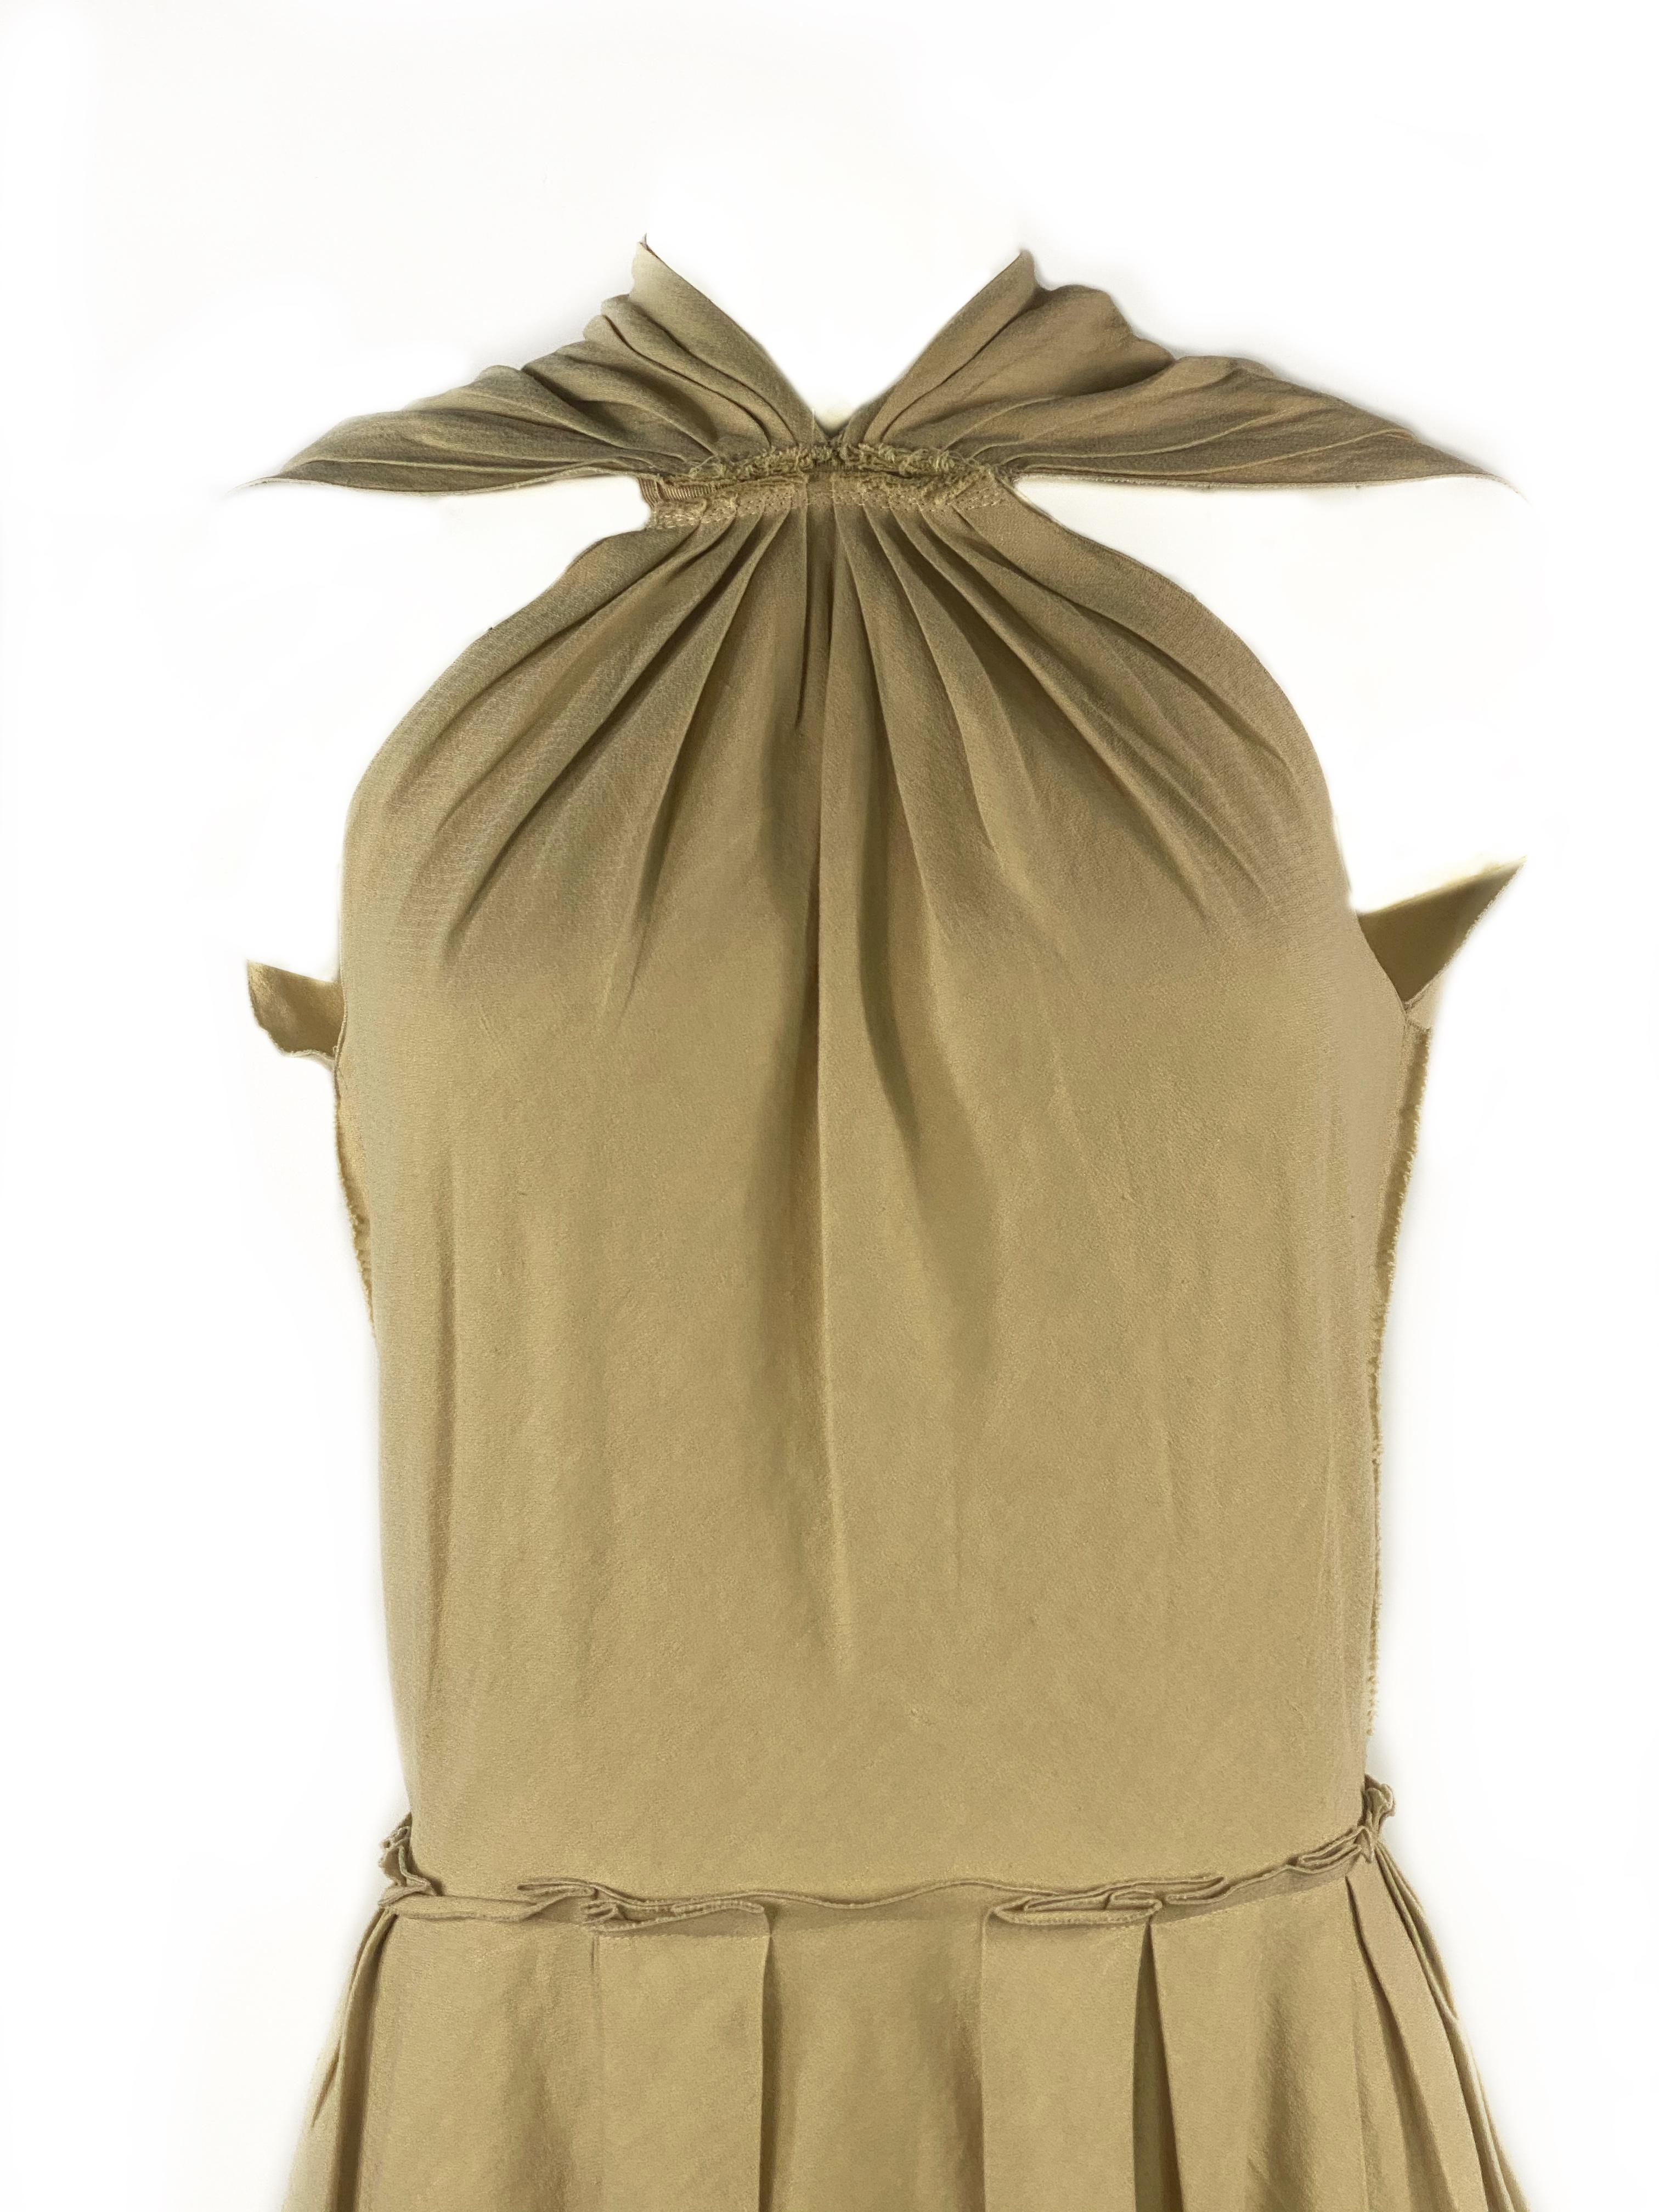 LANVIN Est. 2009 Ivory Cream Sleeveless Mini dress w/ Zipper Size 36

Product details:
Size 36
66% Linen, 34% Cotton
Featuring zipper detailed design on the back, measures 21